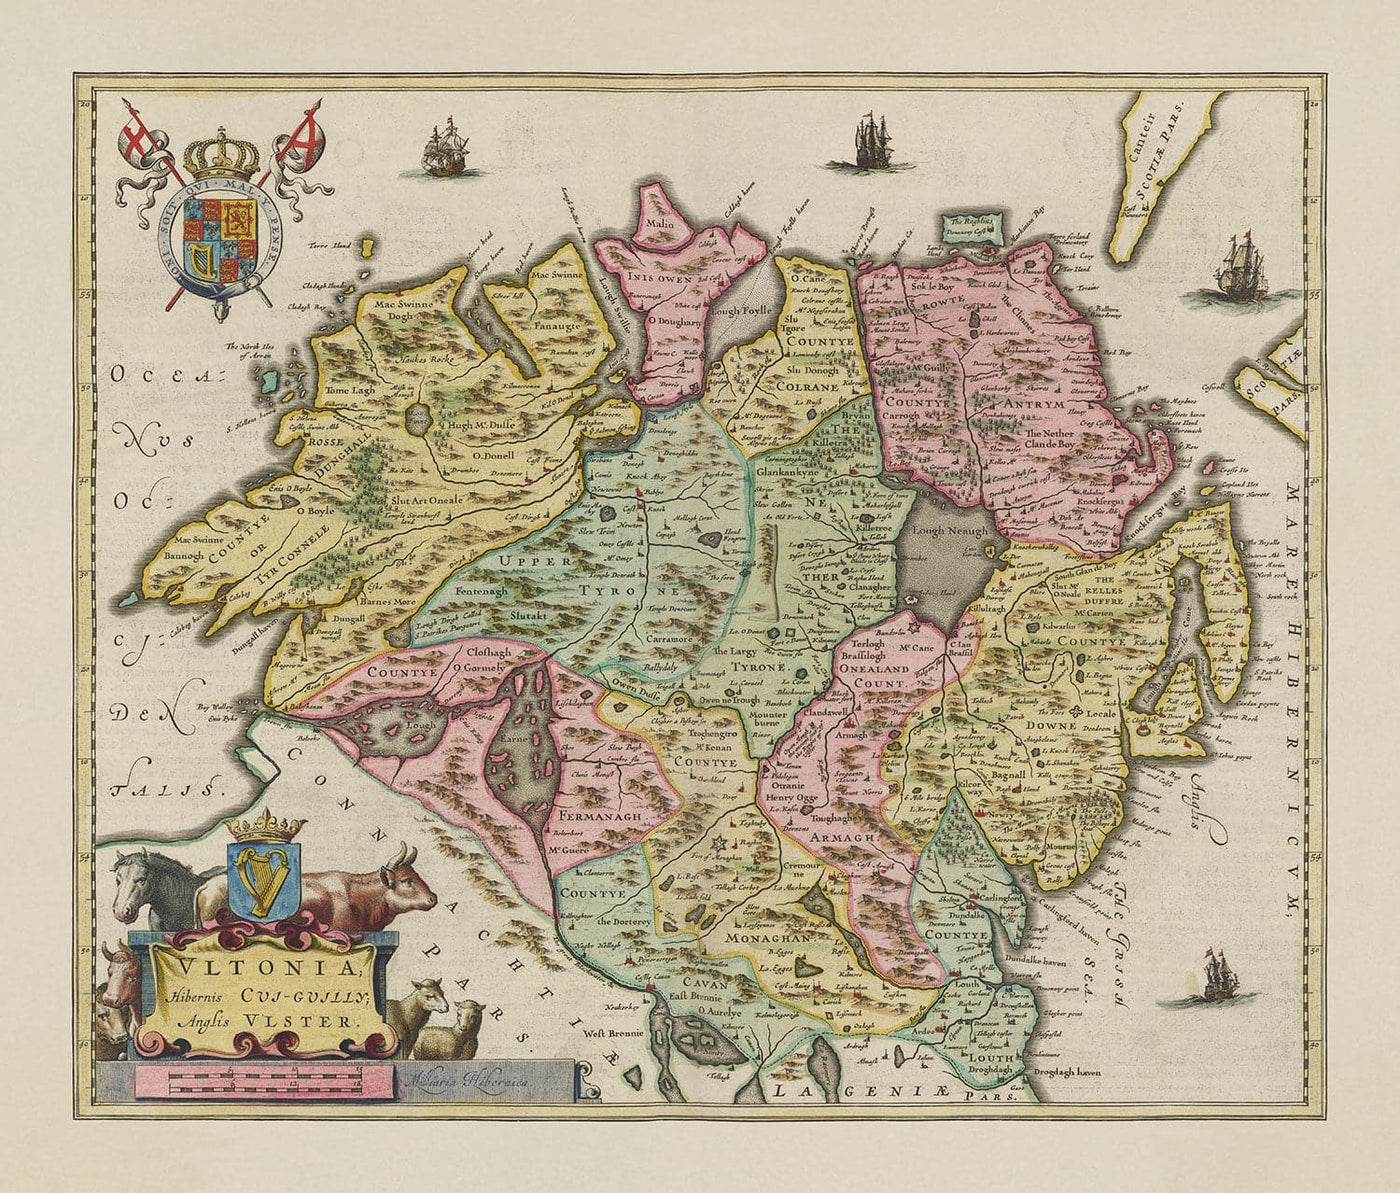 Ancienne Carte de Ulster, Irlande du Nord en 1665 par Joan Blaeu - Belfast, Derry, Comté Antrim & Down, Eire